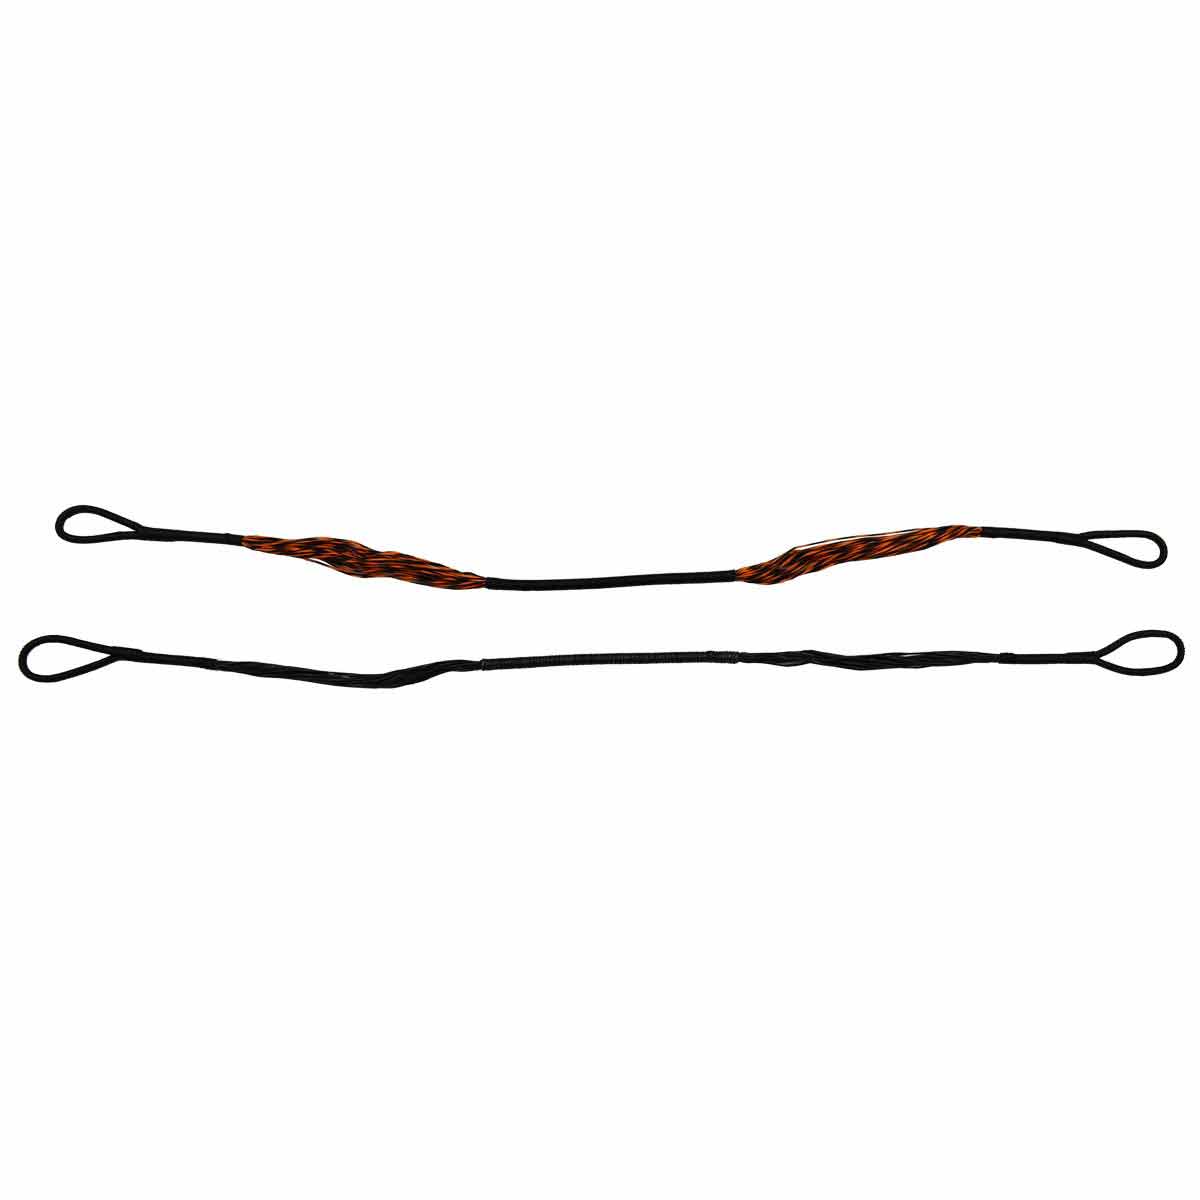 AR-Series string for limb